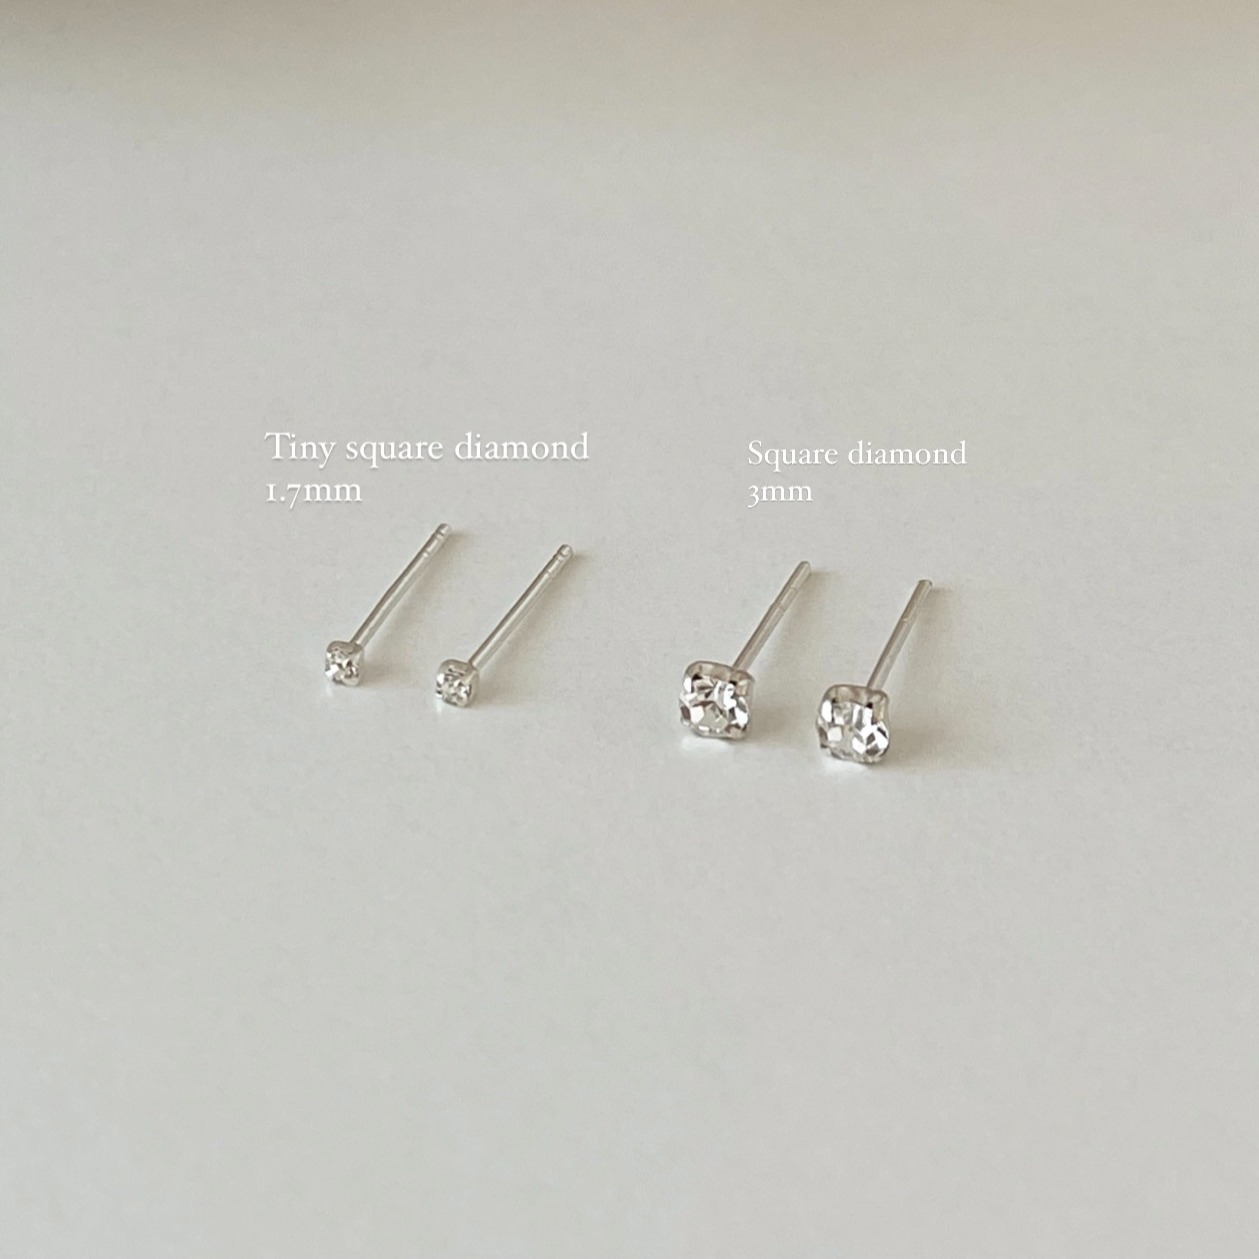 Your wishlist / ต่างหูเพชร cz ต่างหูเงินแท้ / Square cz diamond stud earrings (ราคาต่อคู่)